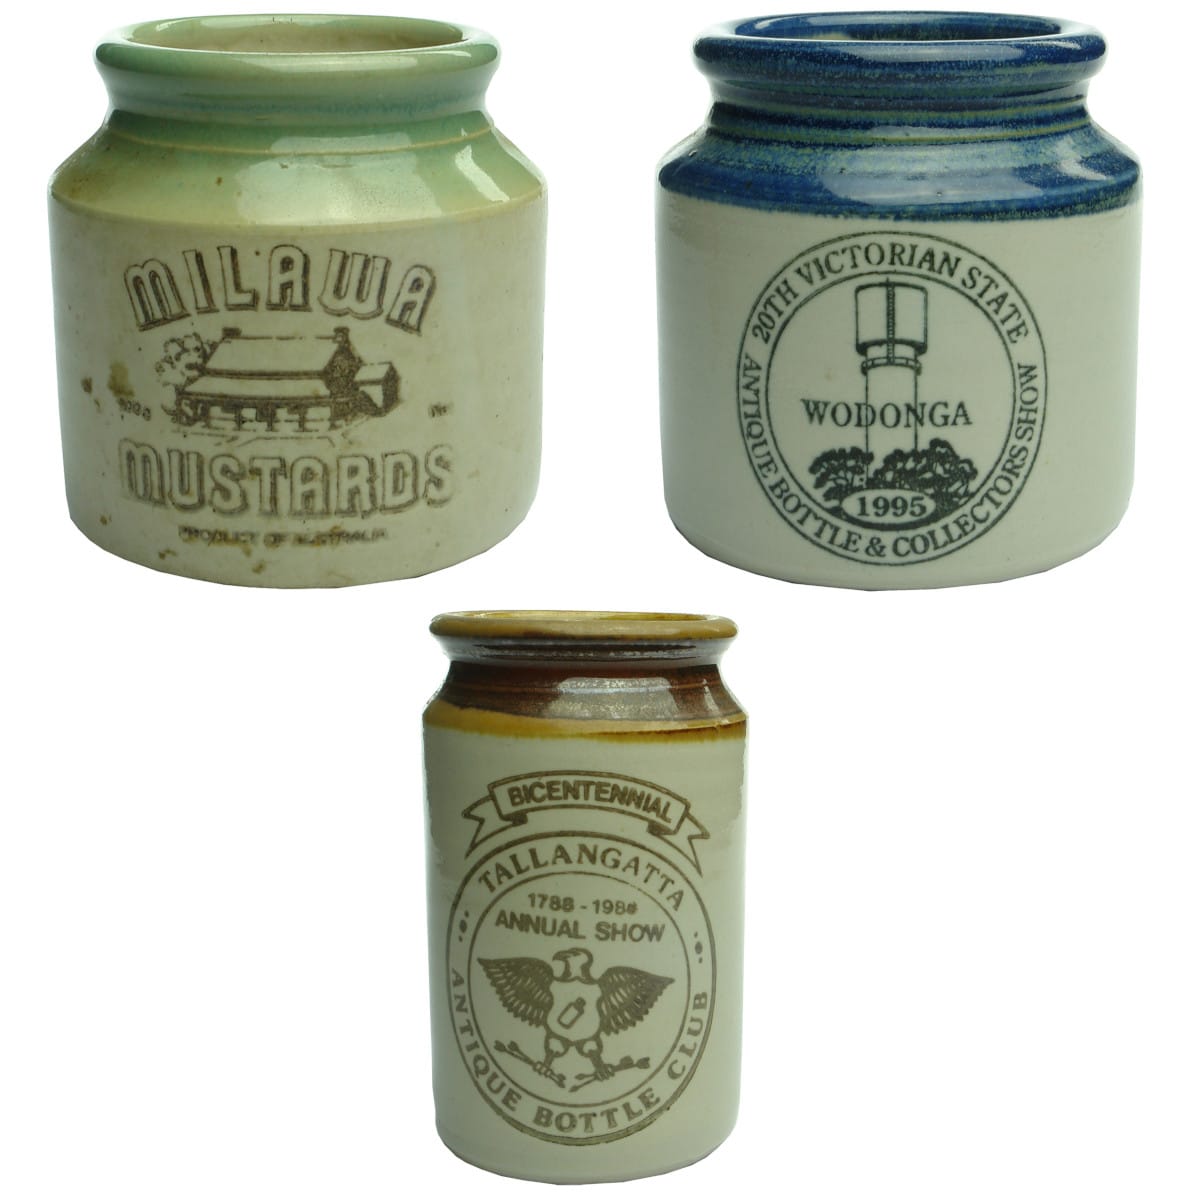 Three Pottery Jars. Milawa Mustards; 20th Victorian State Bottle & Collectors Show Wodonga; Tallangatta Bottle Club 1988. Brookfield Pottery Everton. (Victoria)